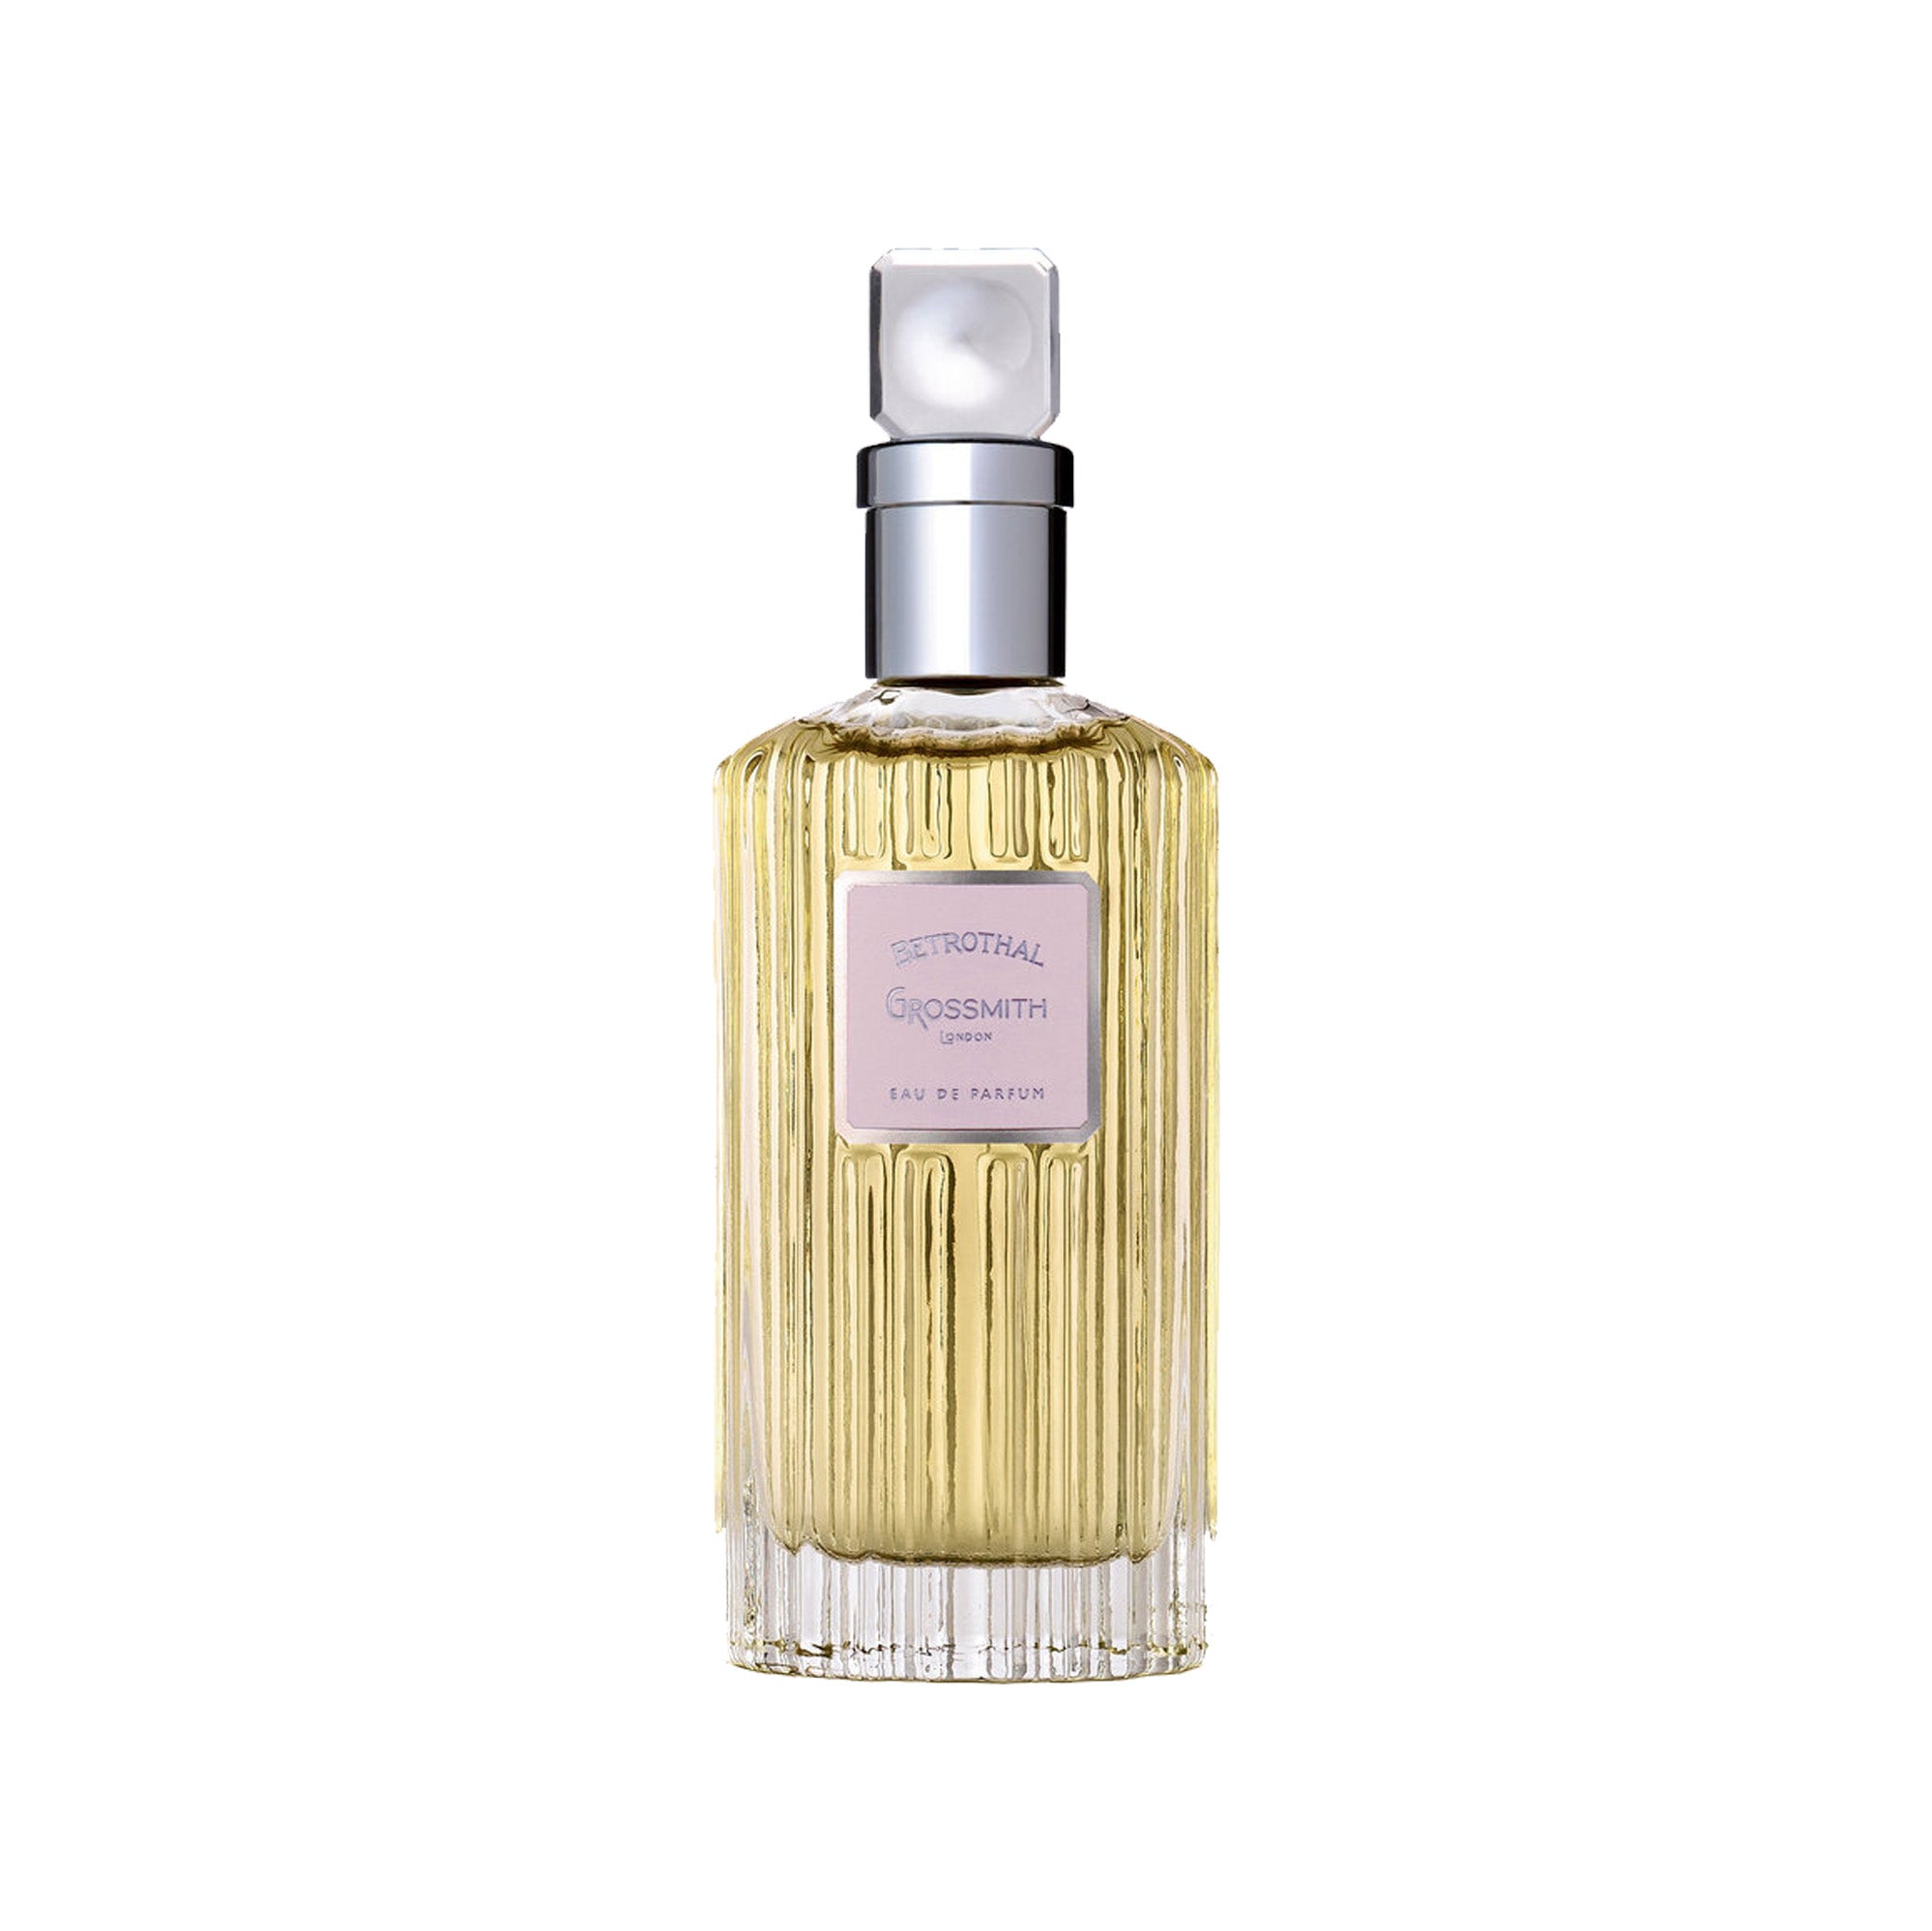 Betrothal Eau de Parfum 100ml Bottle by Grossmith London